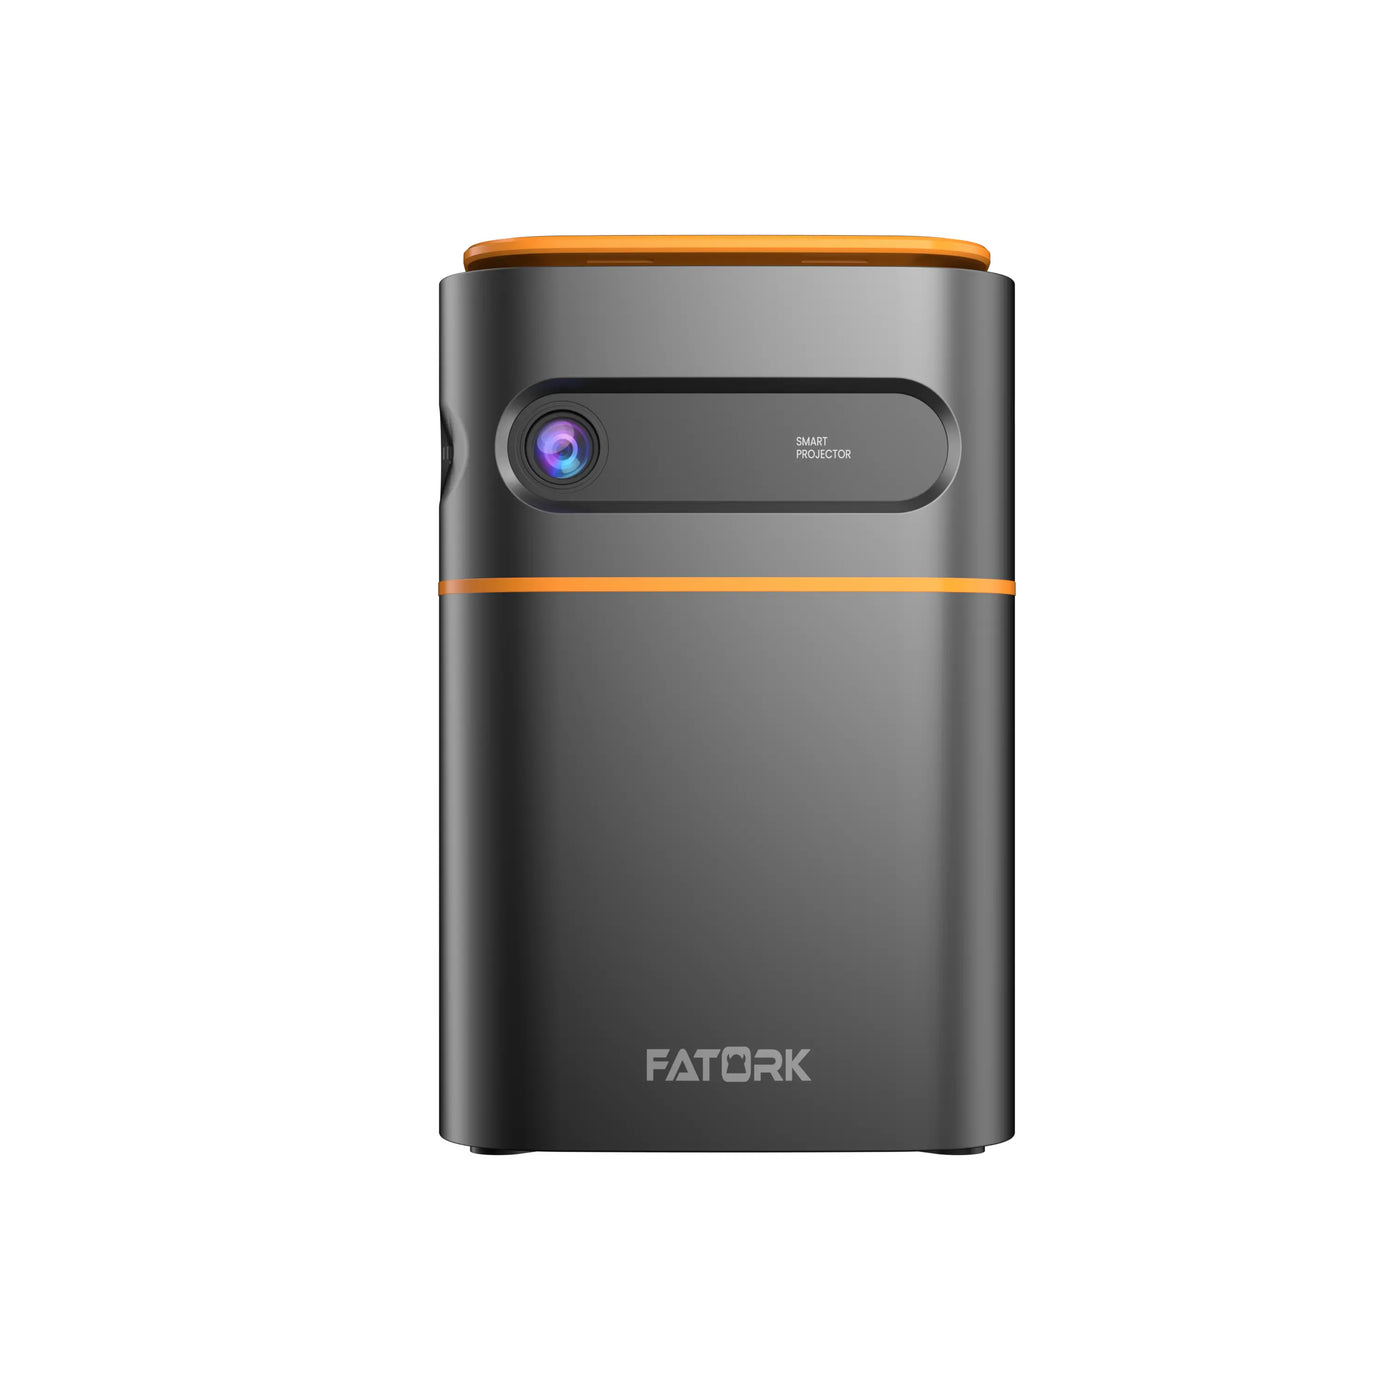 FATORK Pocket Monster-5G WiFi Smart Portable Movie Projector Fatork